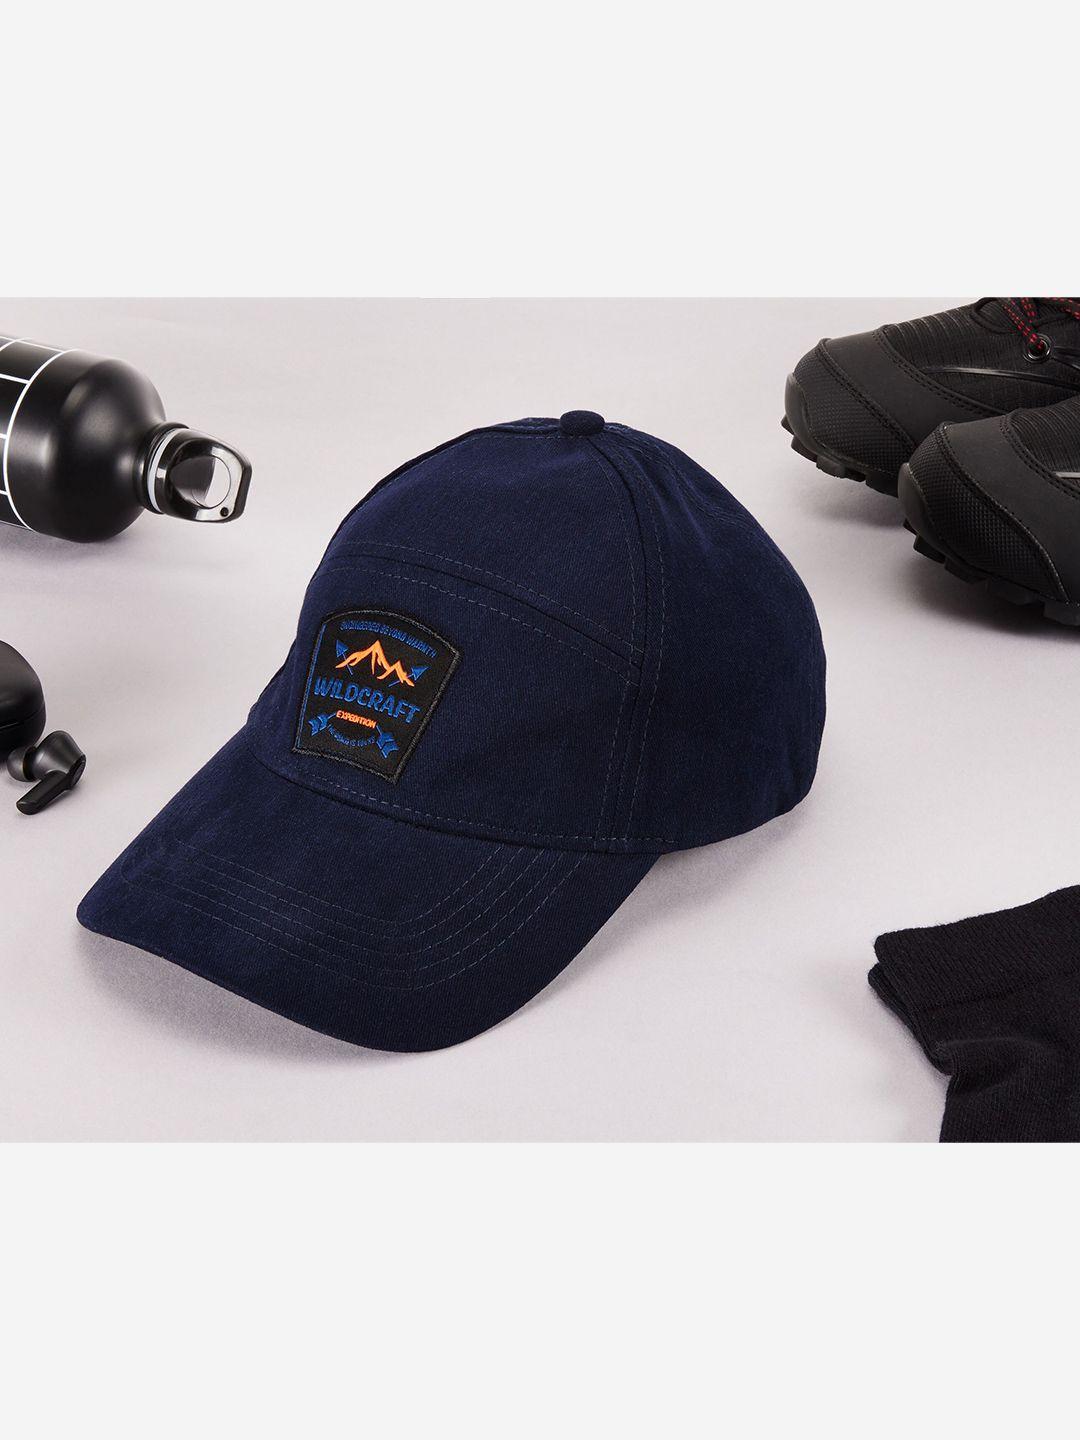 wildcraft adults navy blue brand logo printed cotton baseball cap